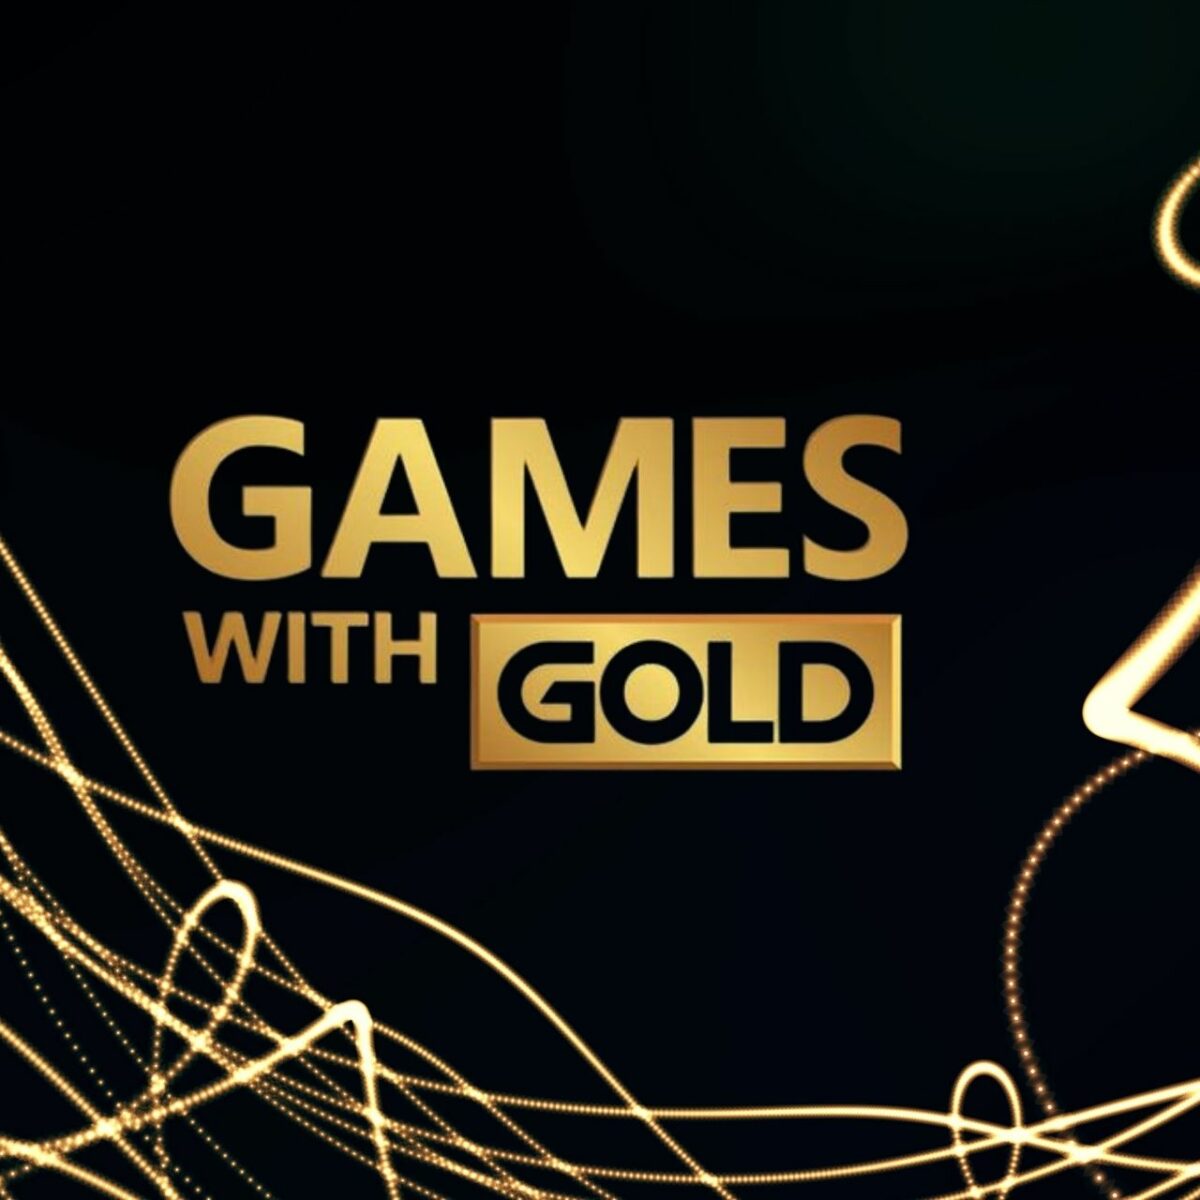 Gymnastiek Hijgend Onderdrukker Xbox Live Gold Offers Many Hot Game Deals on Cyber Monday